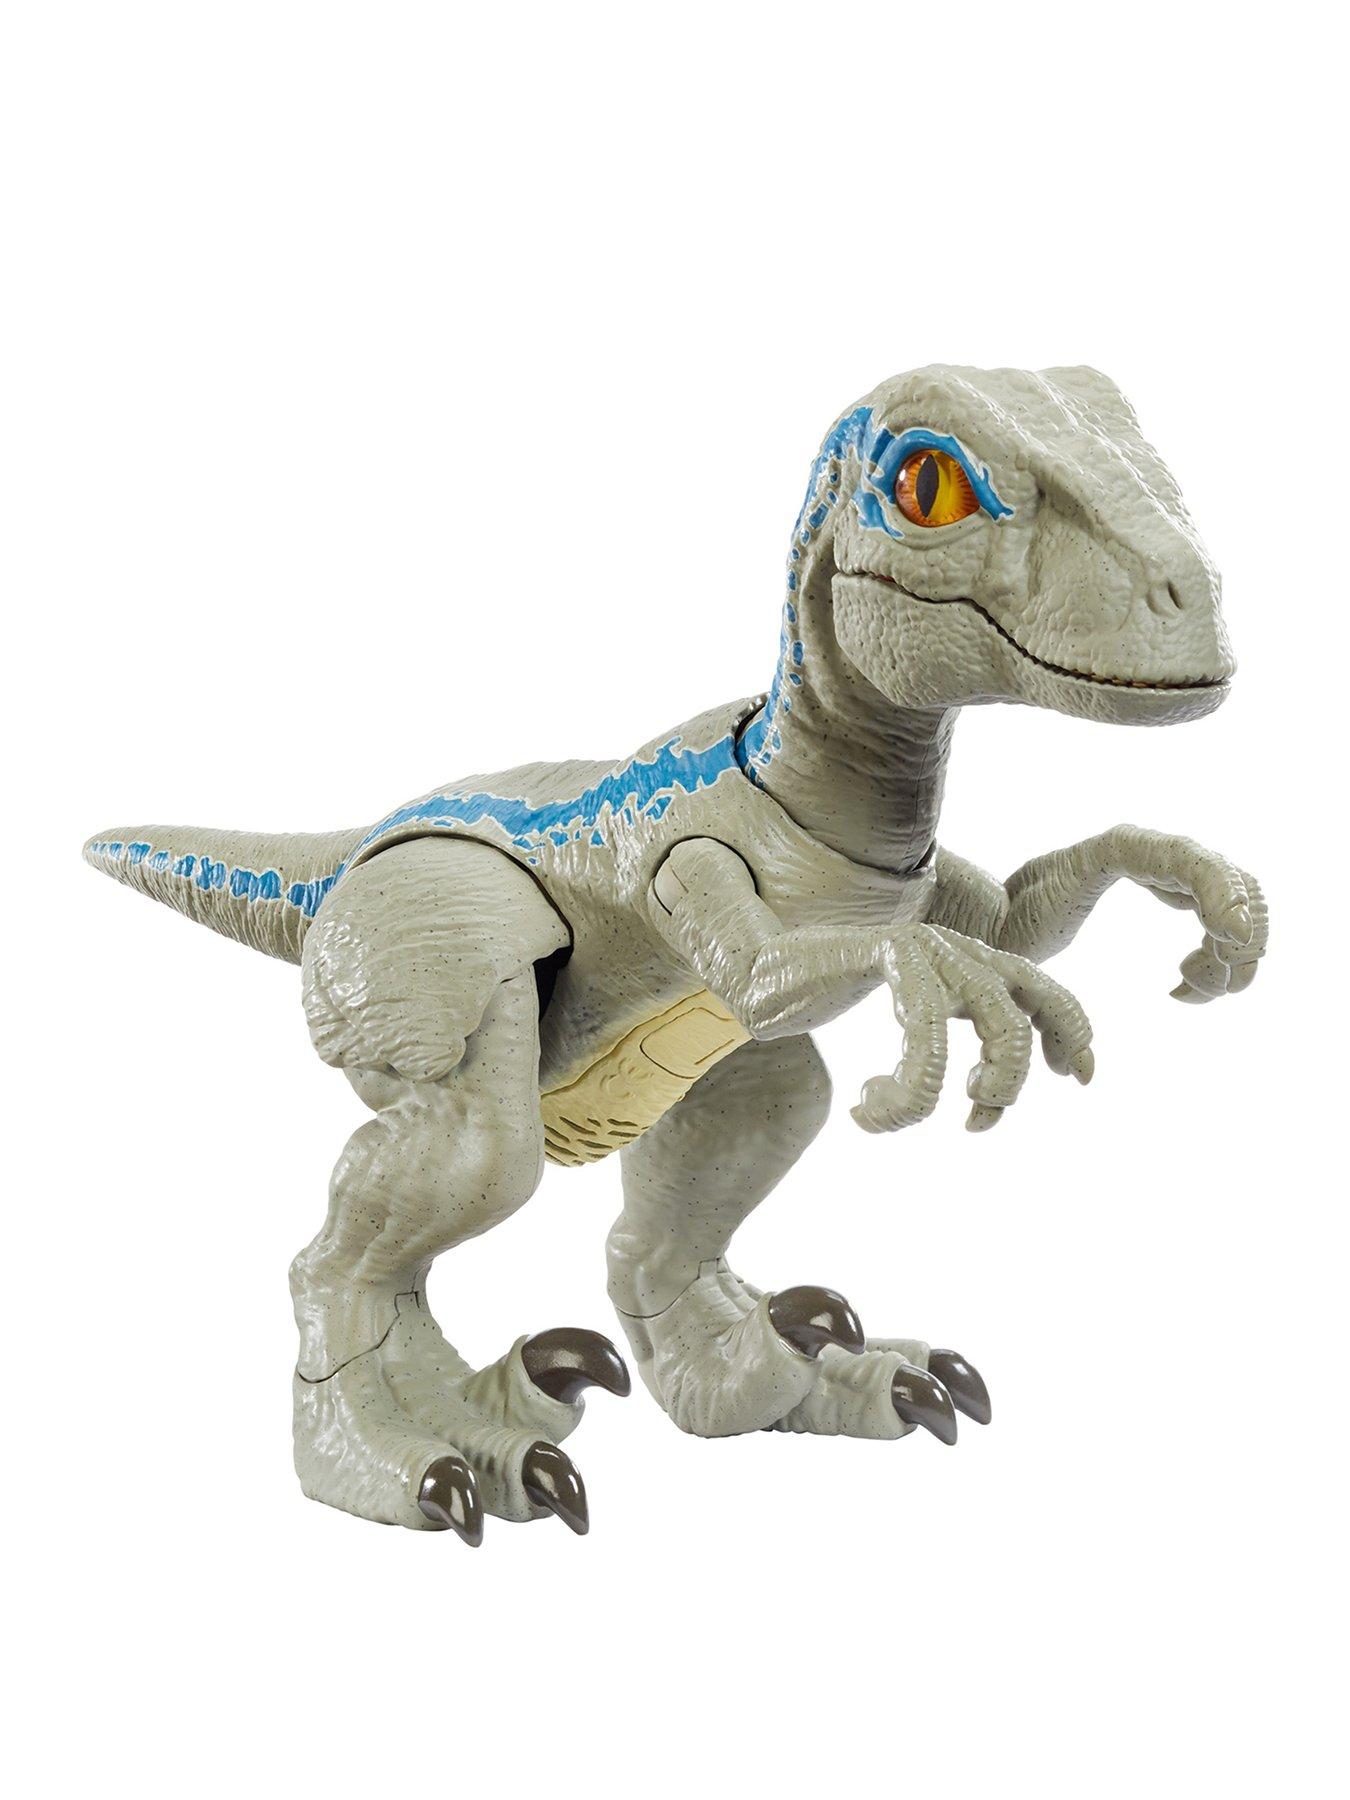 Jurassic World Toys Dinosaurs Merchandise Littlewoods - how to get jurassic world headphones roblox